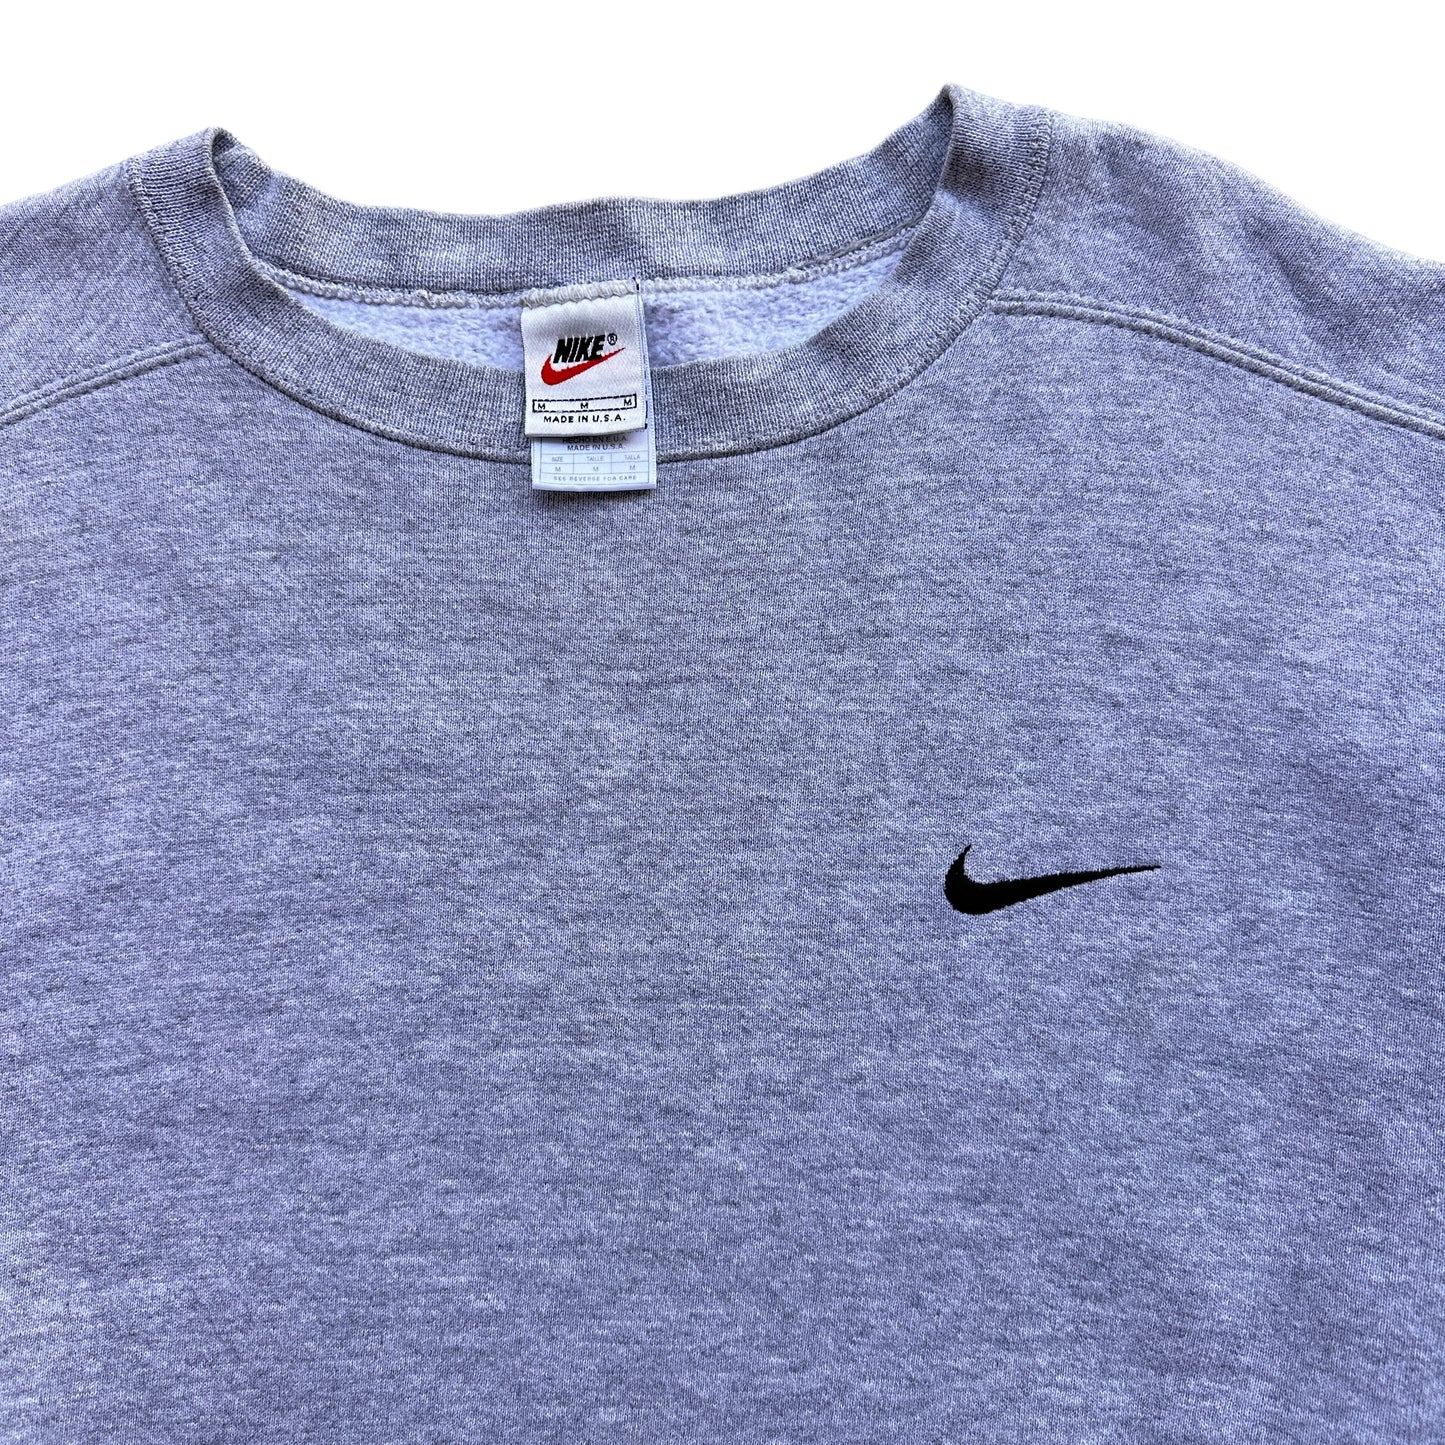 90s Nike crewneck Made in usa🇺🇸 medium